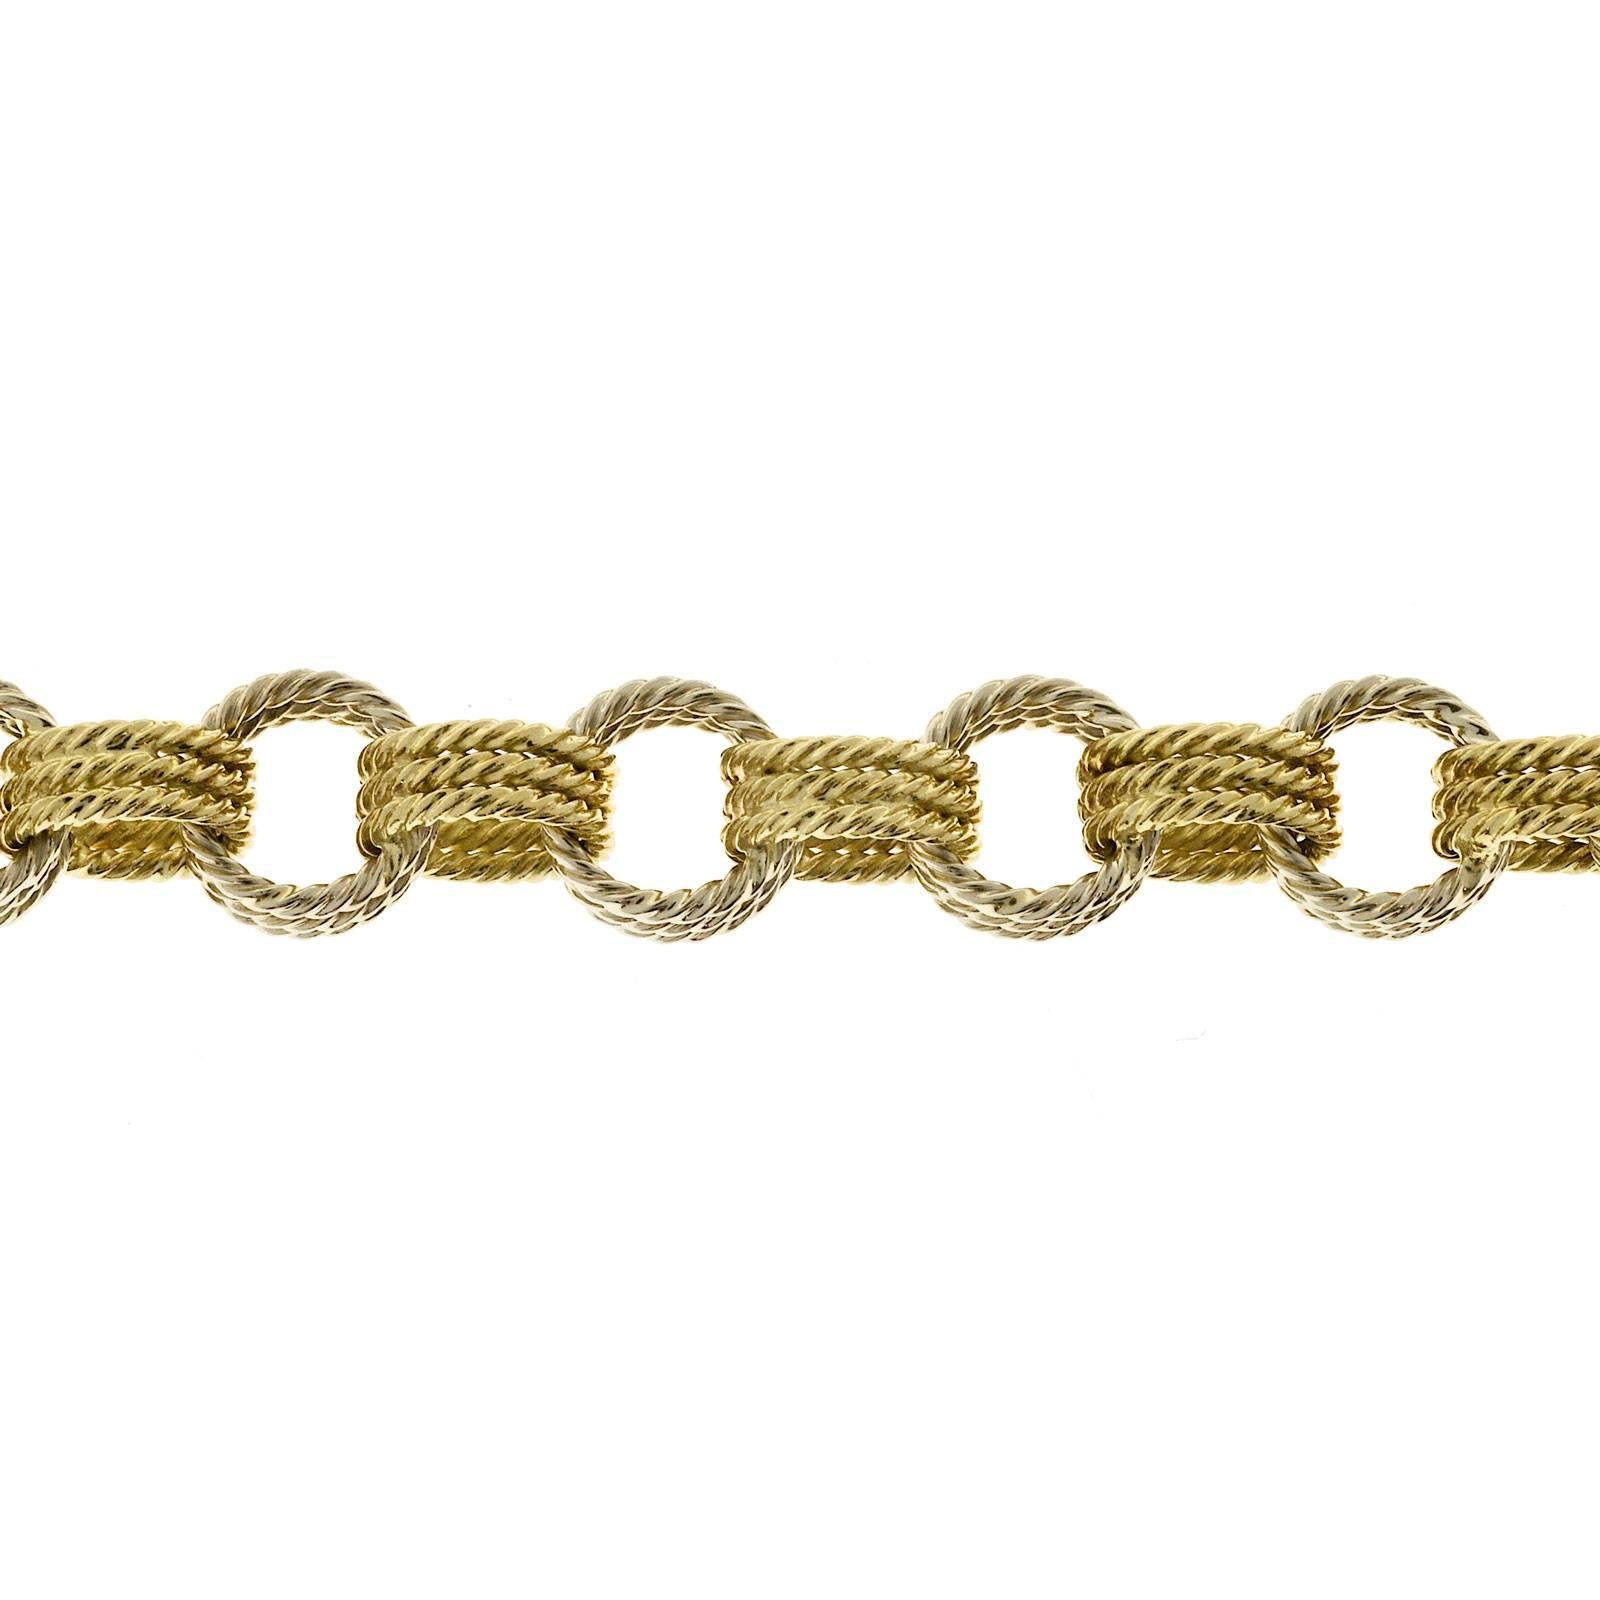 Women's Handmade 2 Color Gold Wire Link Necklace Bracelet